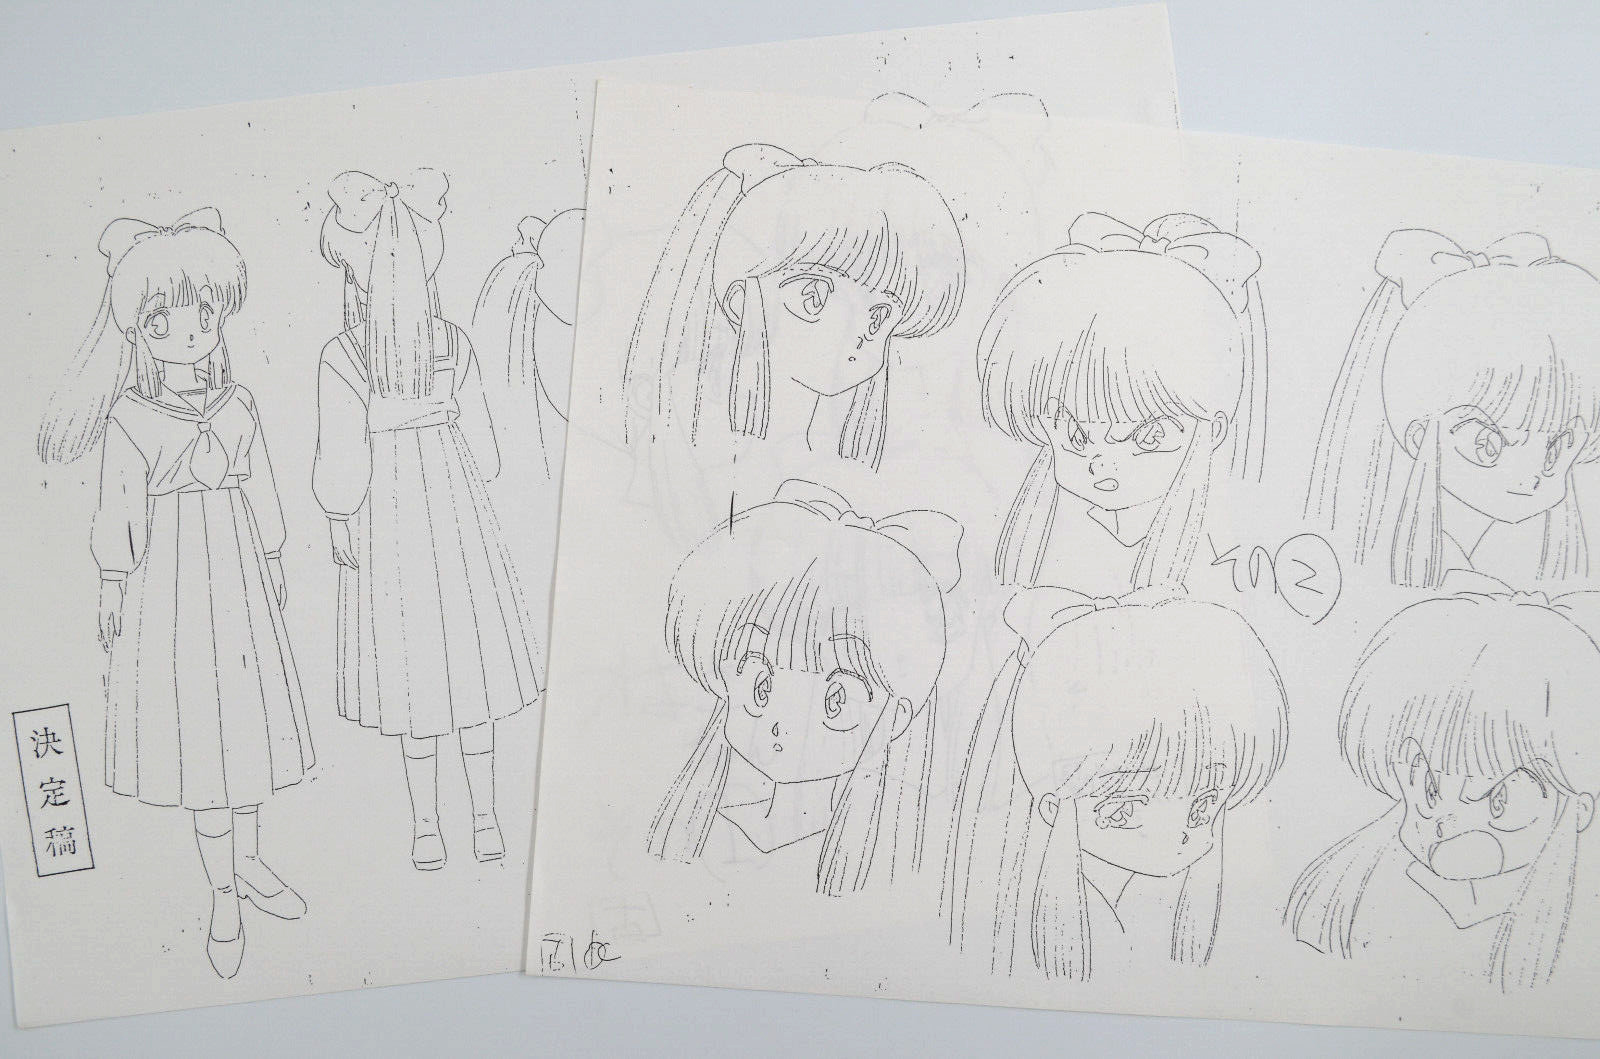 Original Ranma 1/2 Tsubasa Kurenai Anime Production Setting Notes Pencil Copy